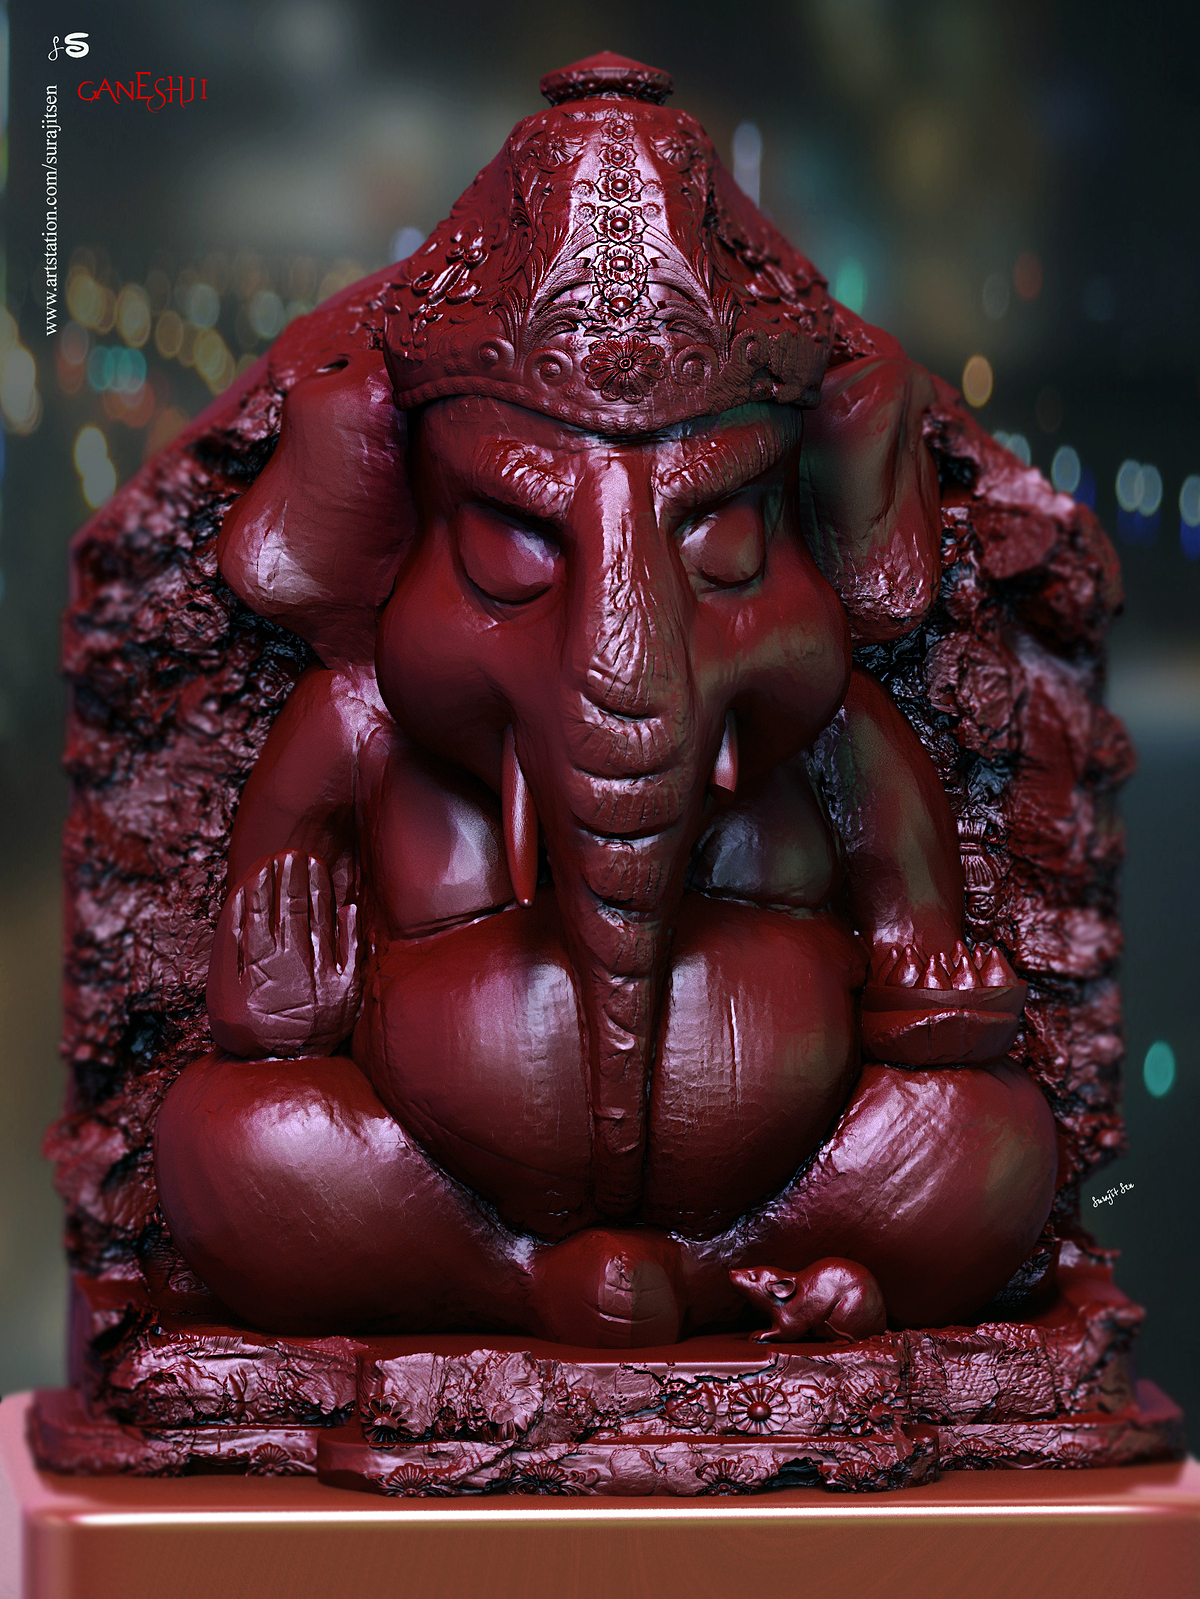 Ganeshji_Digital_Sculpture_SurajitSen_Jan2020S